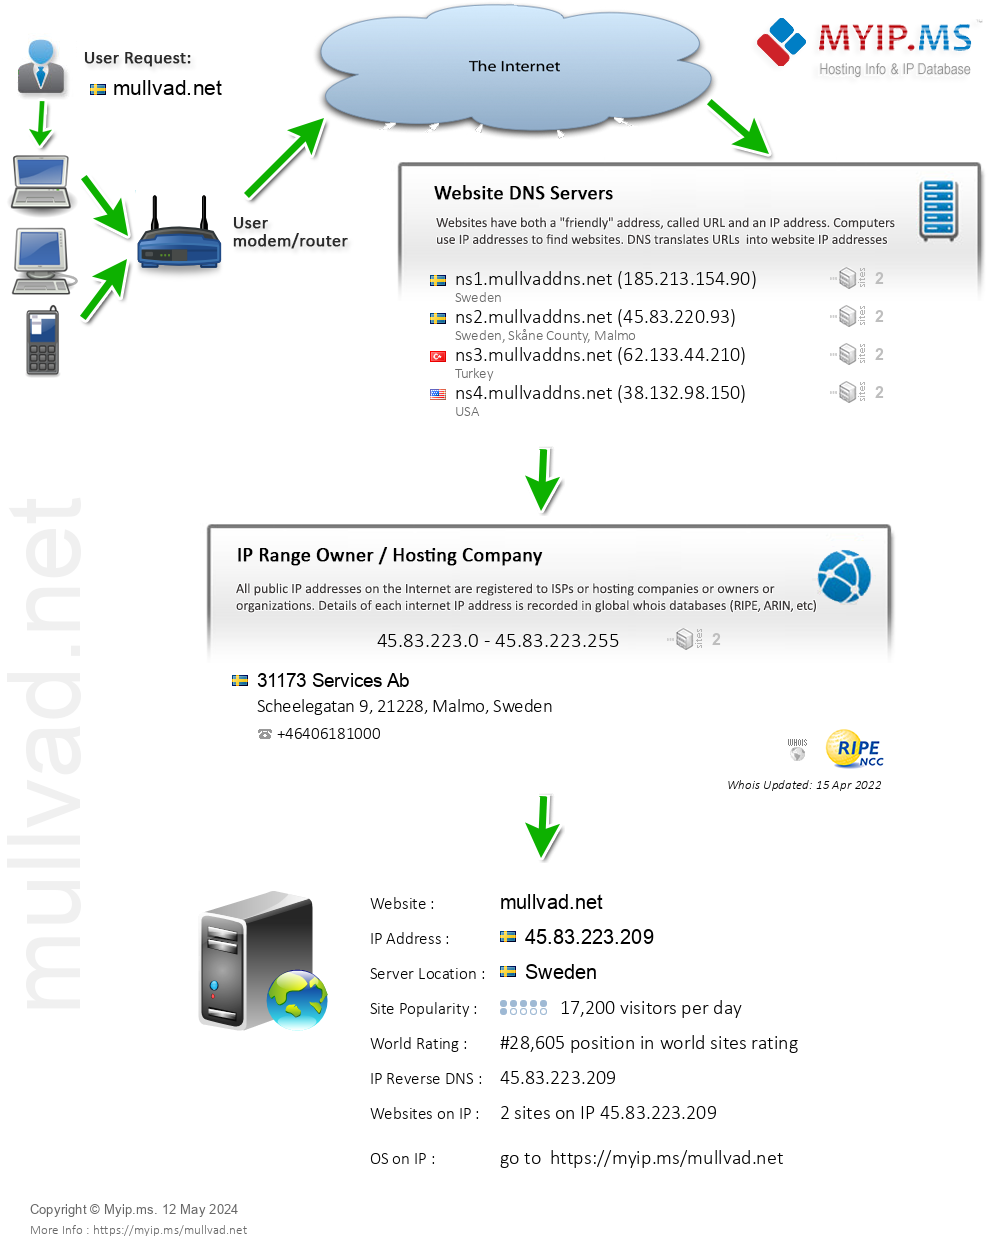 Mullvad.net - Website Hosting Visual IP Diagram